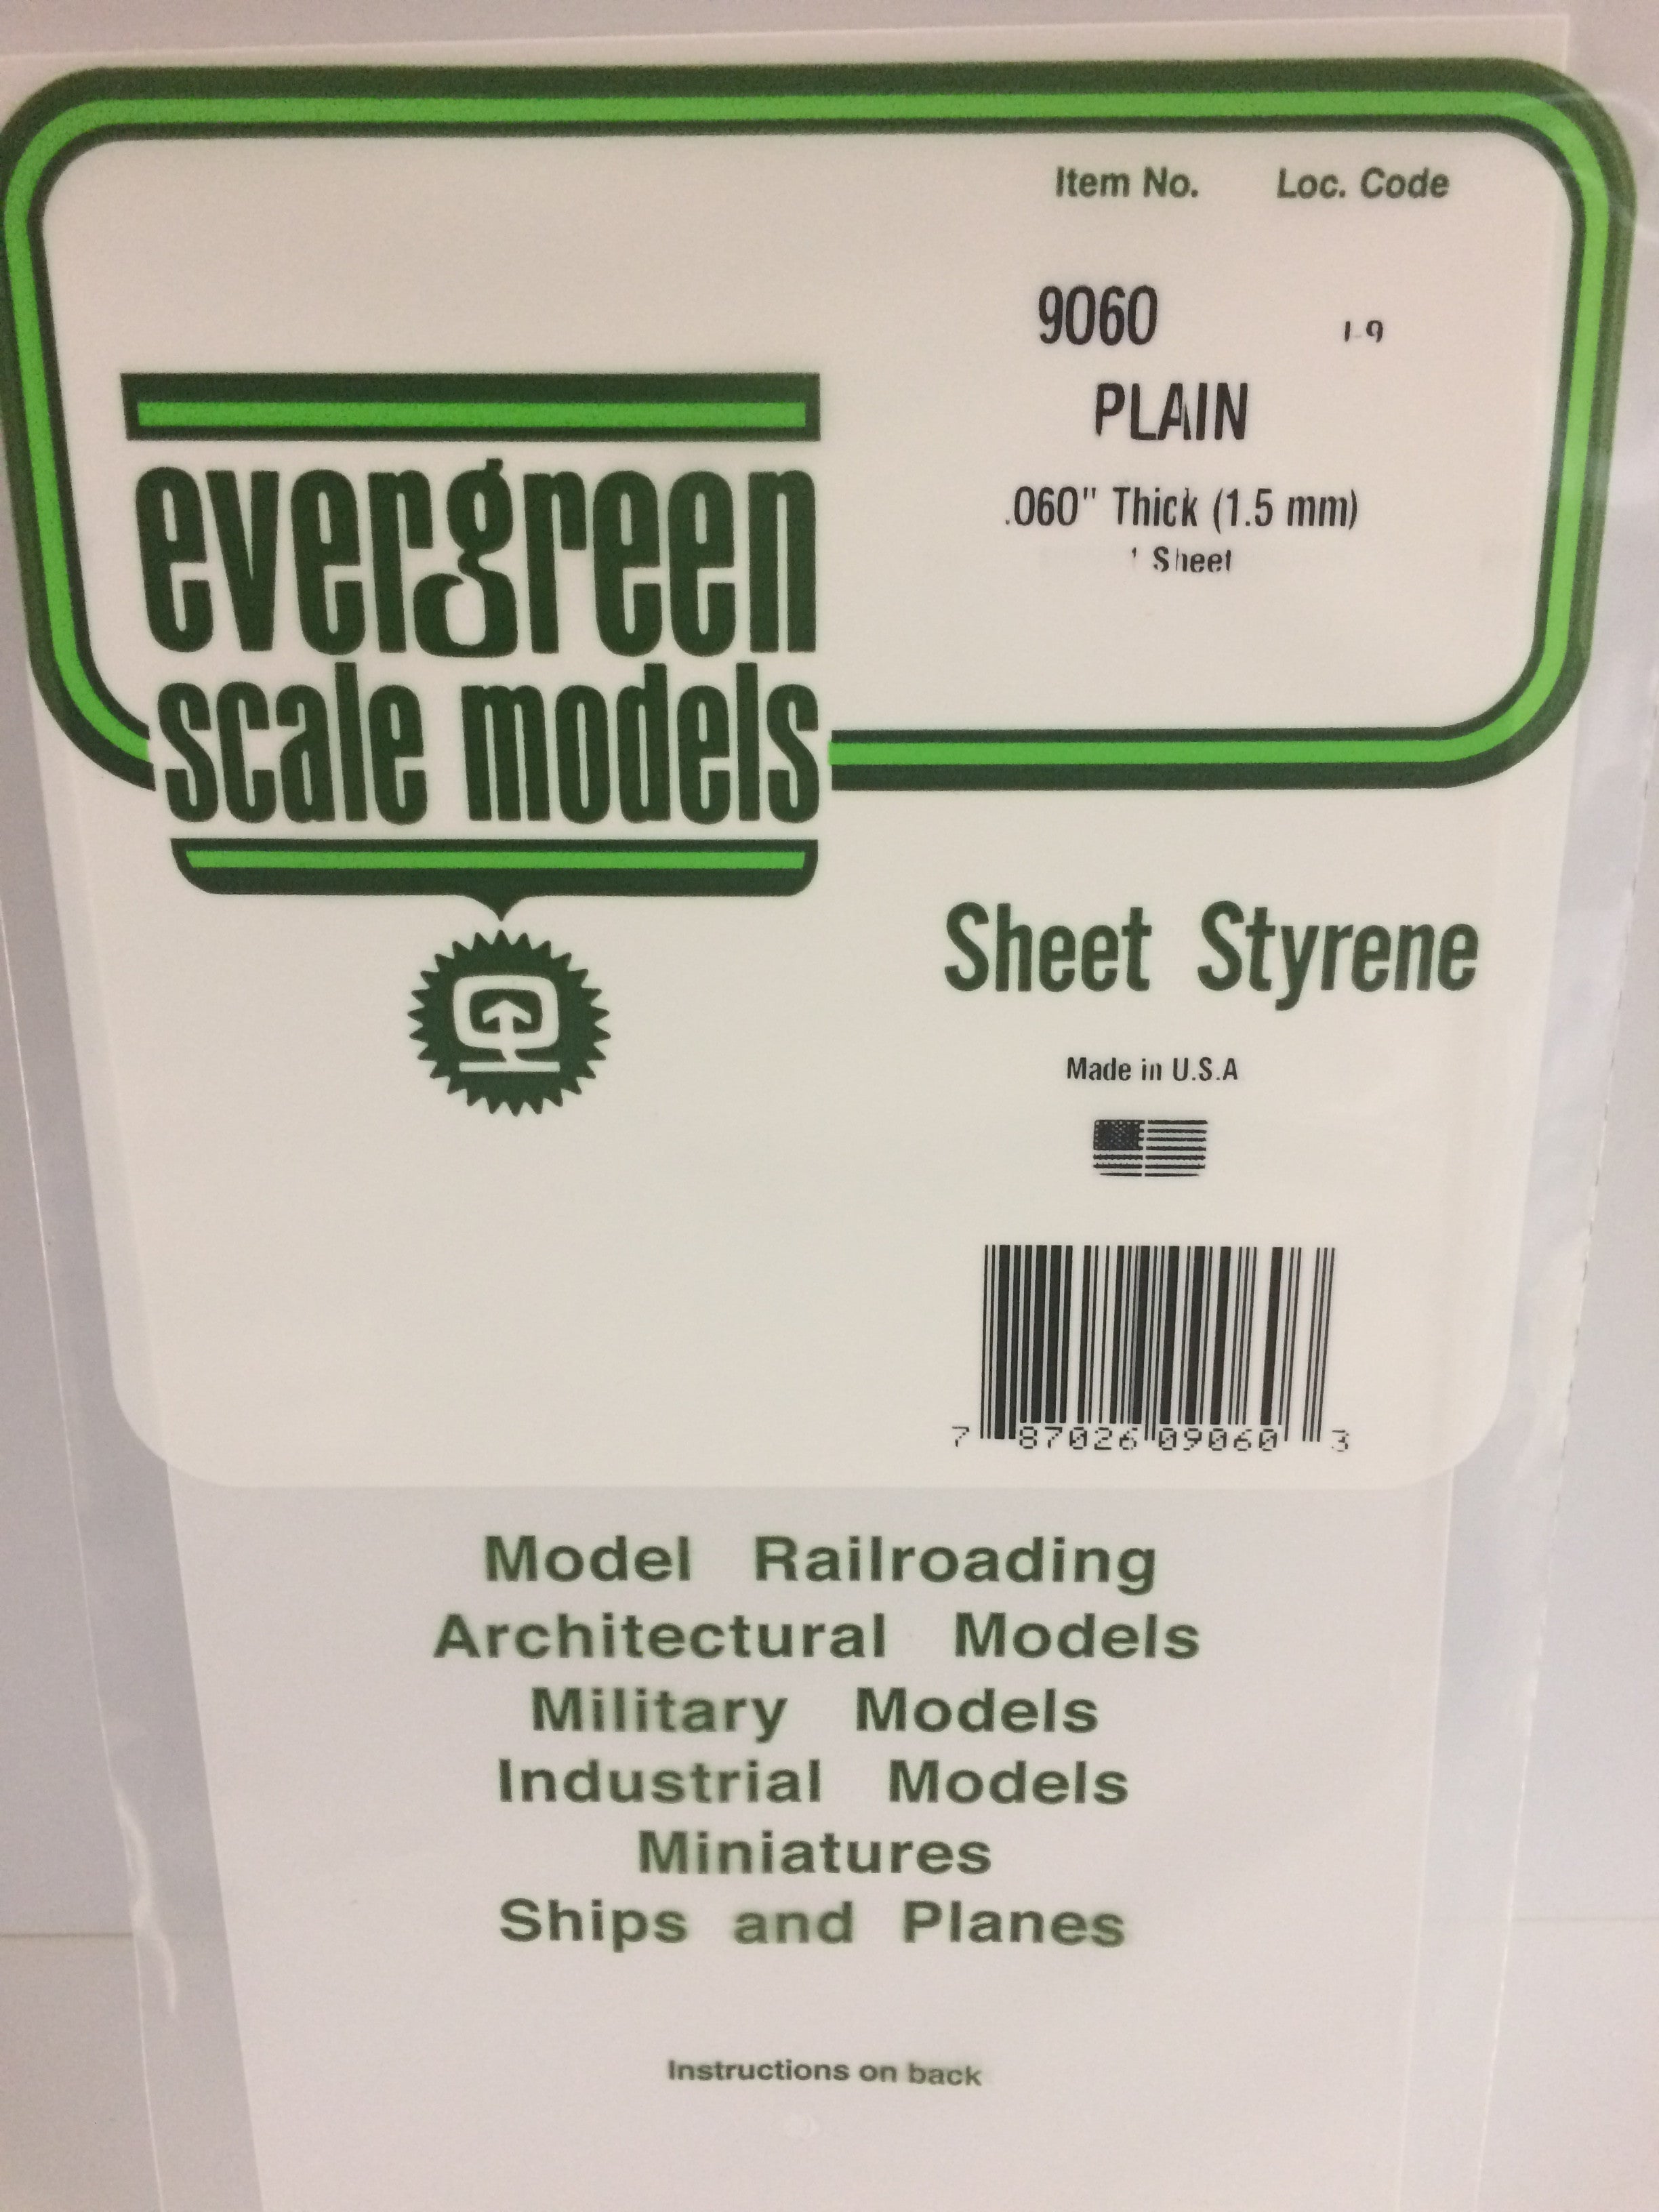 9060 - .060 (1.5mm) PLAIN OPAQUE WHITE POLYSTYRENE SHEET - Evergreen Scale  Models